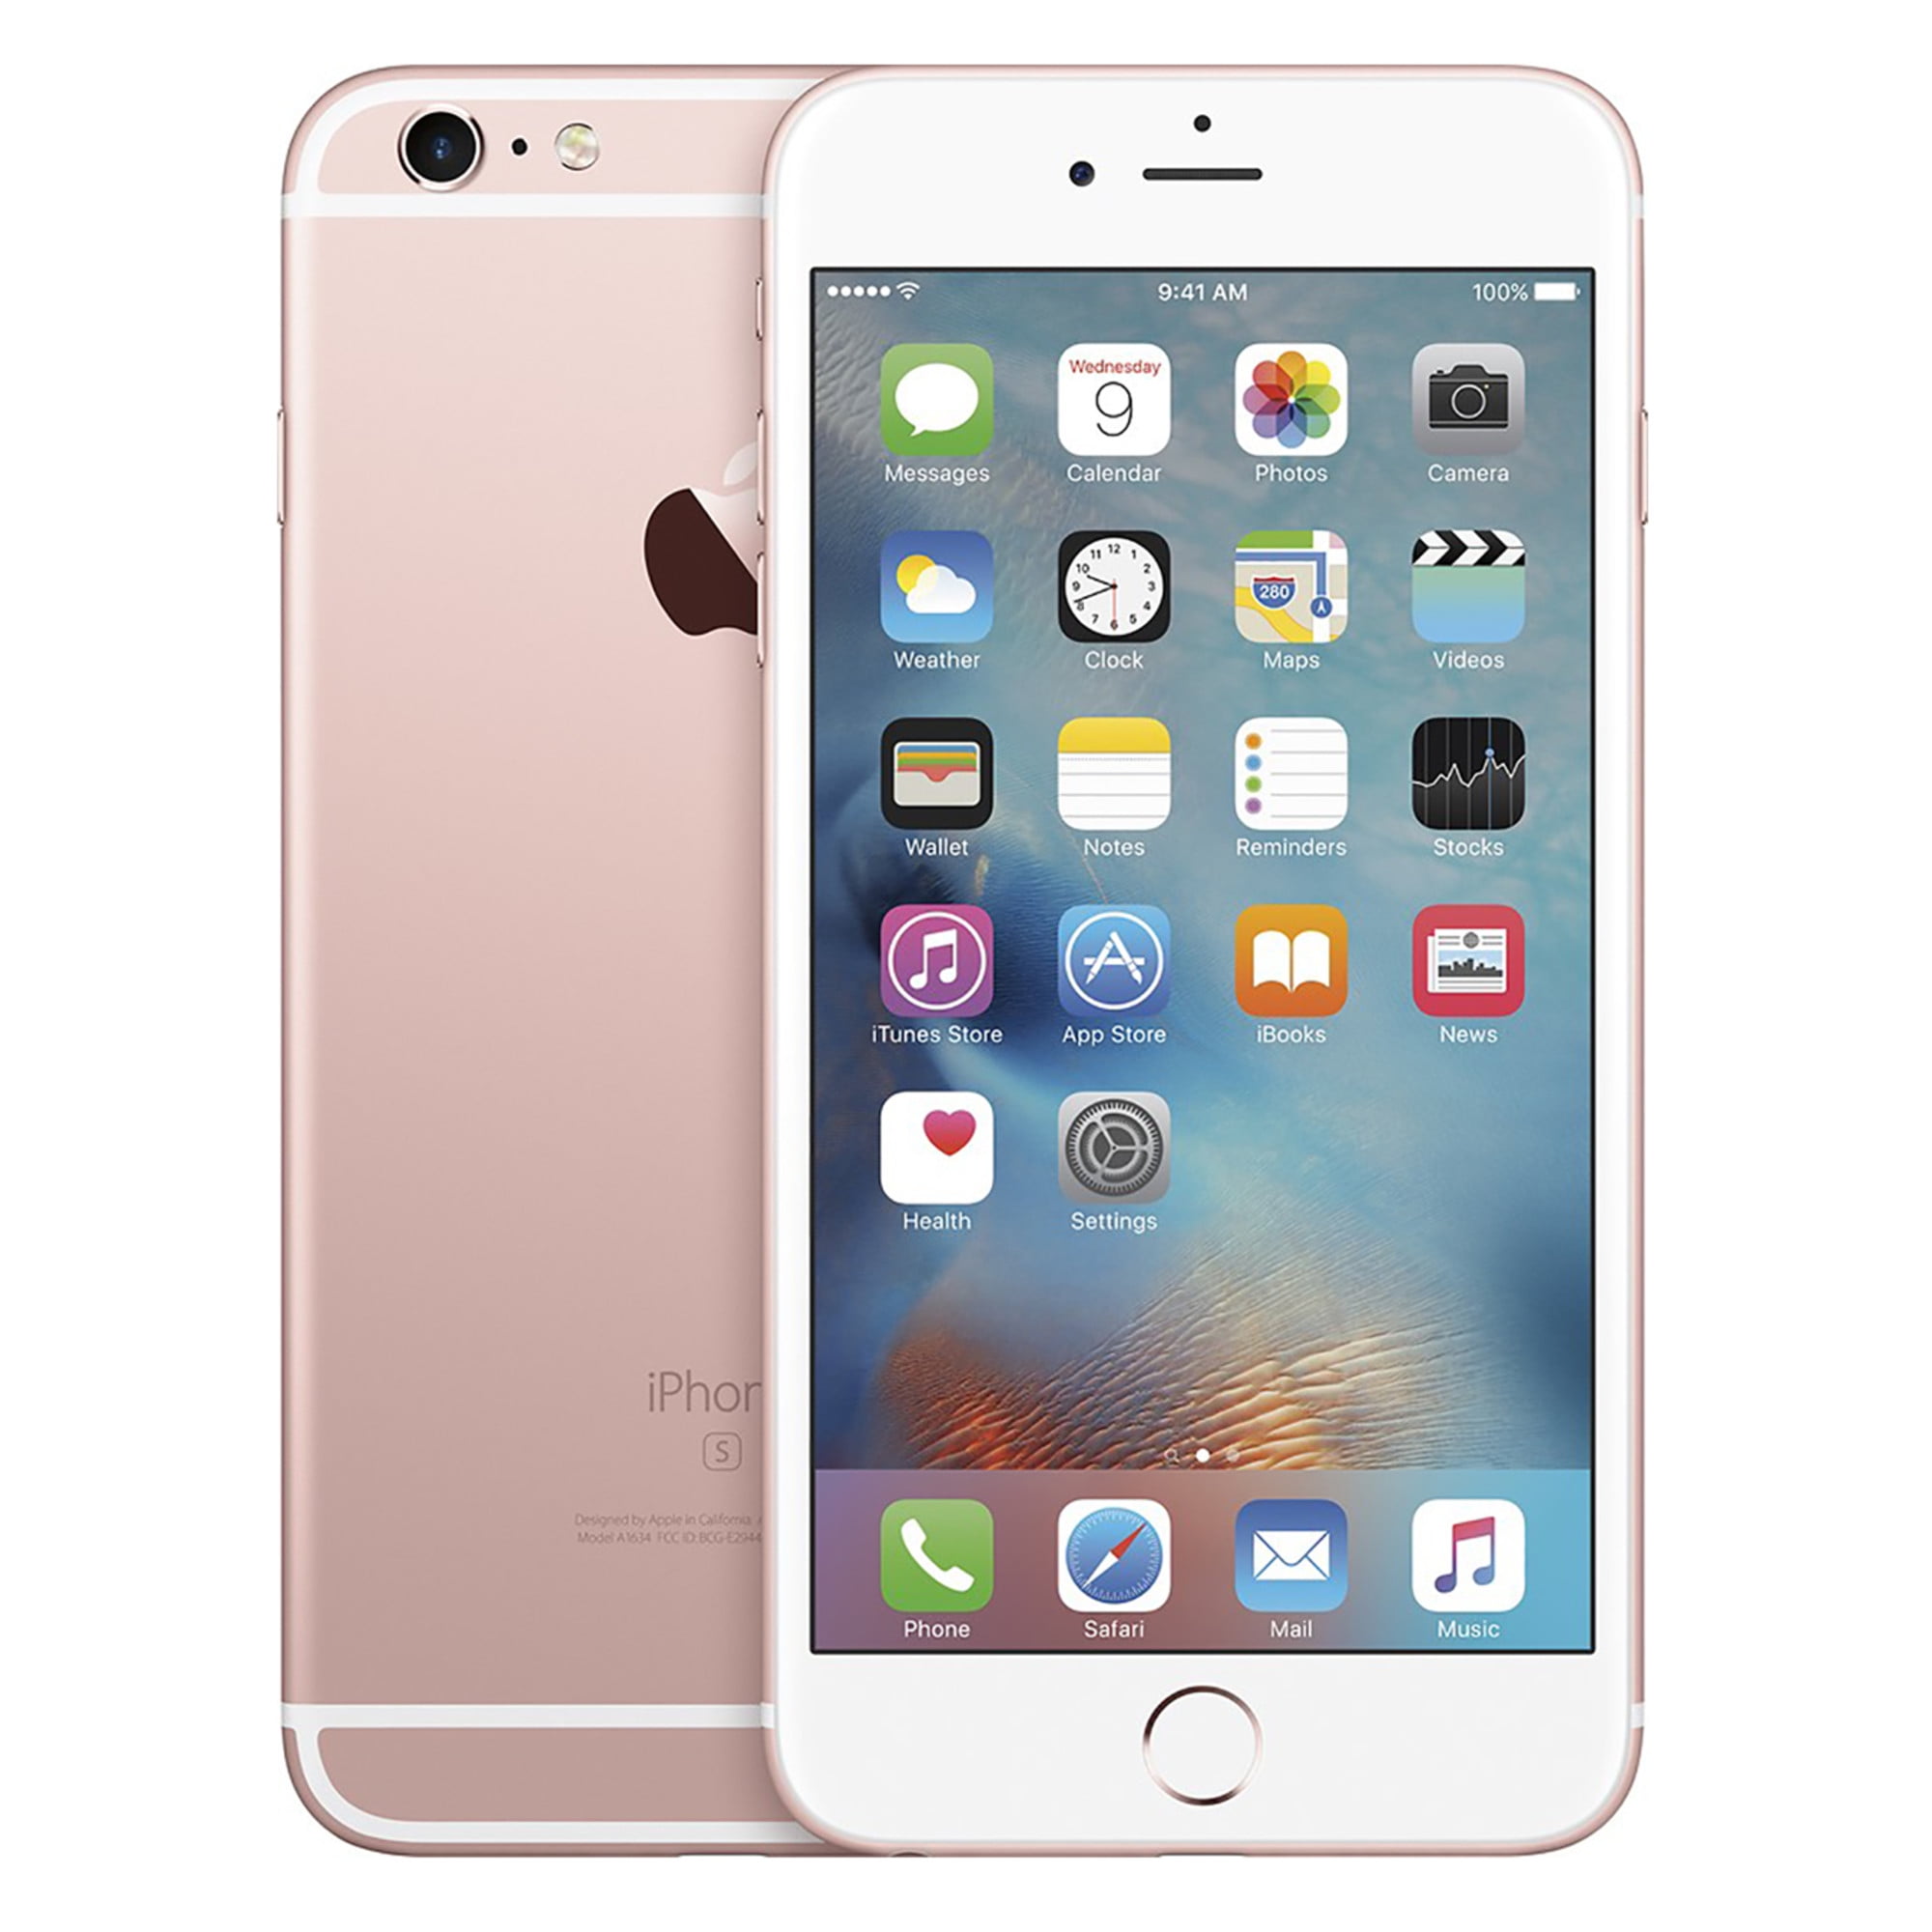 Apple iPhone 6s Plus 32GB Unlocked GSM Phone - Silver (Used)